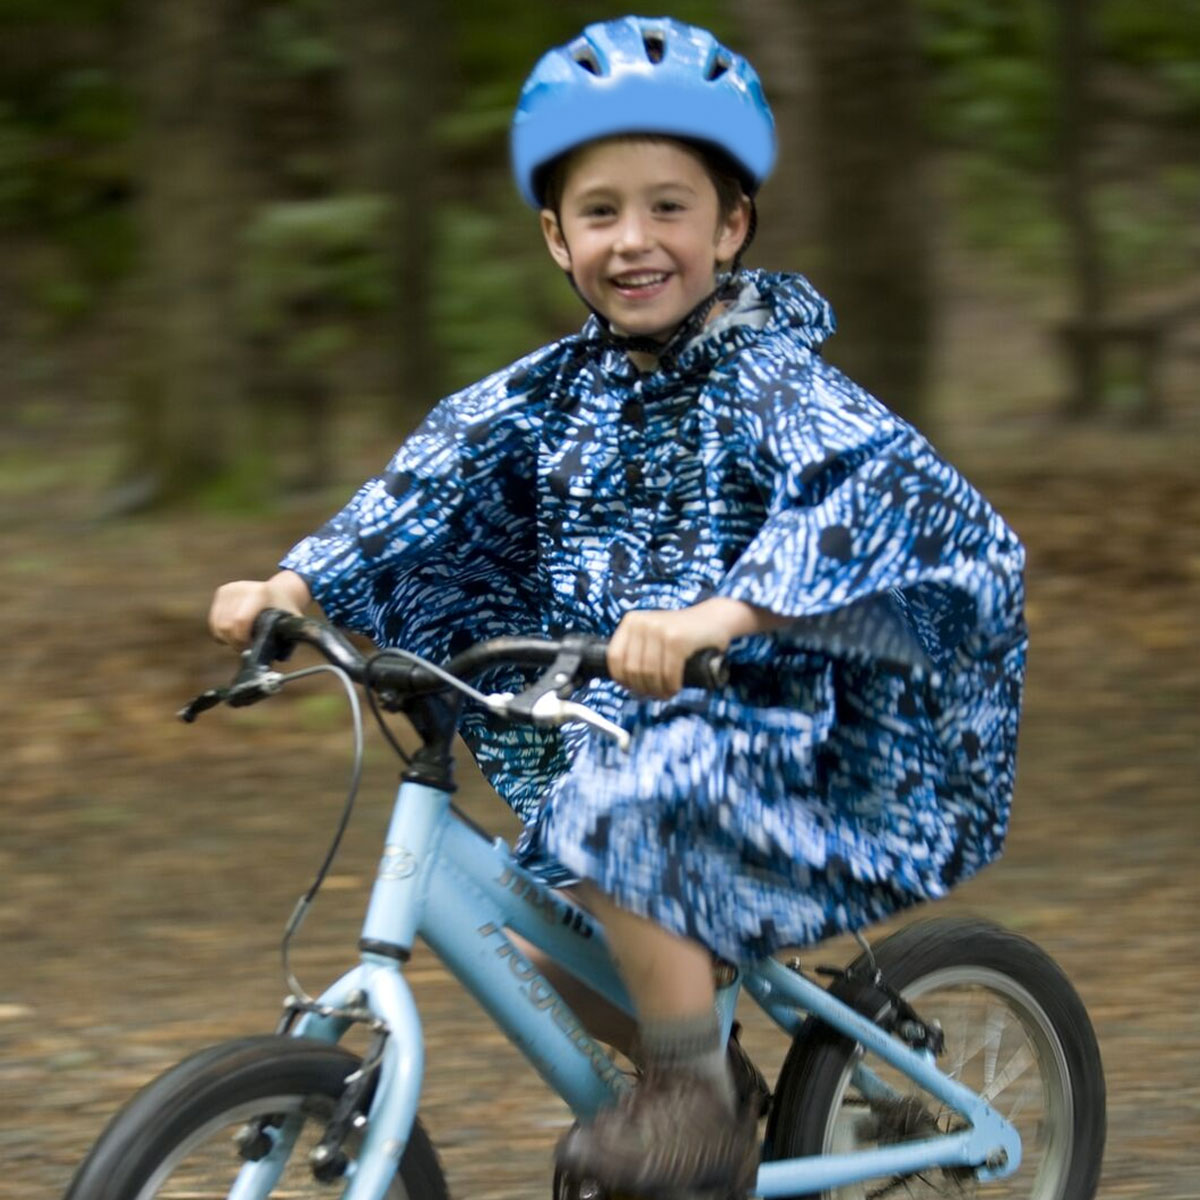 Kids Safety Children Helmet for Bike Scooter Bicycle Skate Board Adjustable - Auto GoShop